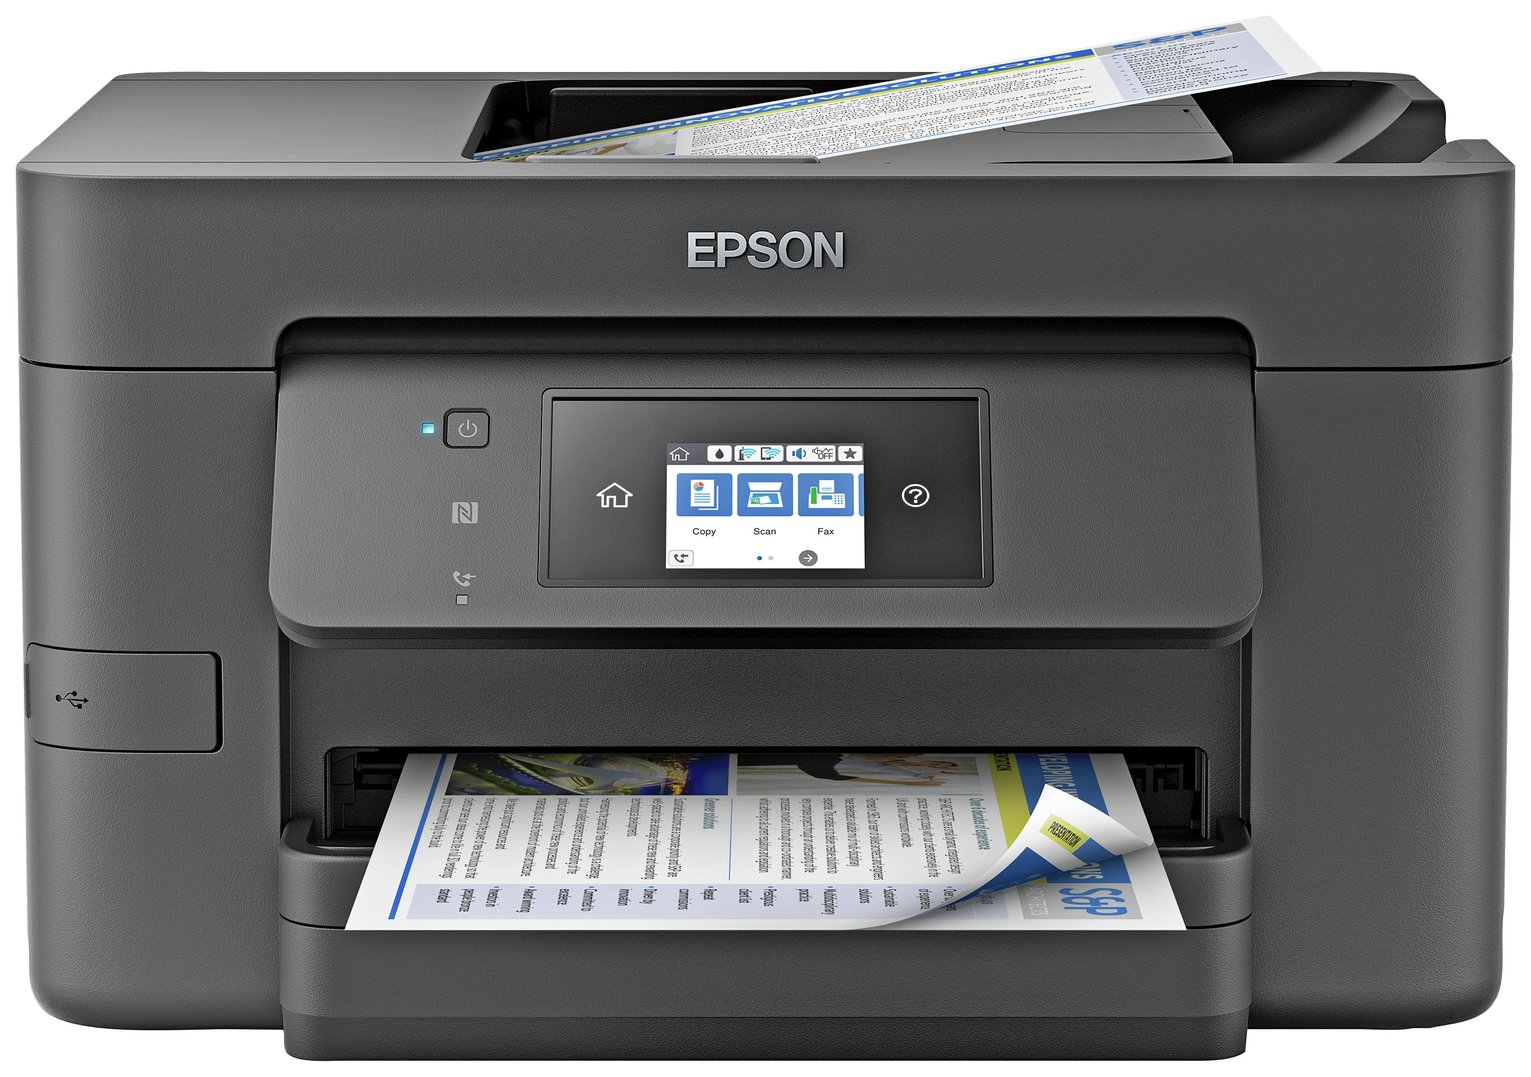 Epson Workforce Pro Wf 3720dwf Inkjet Printer Review 3385